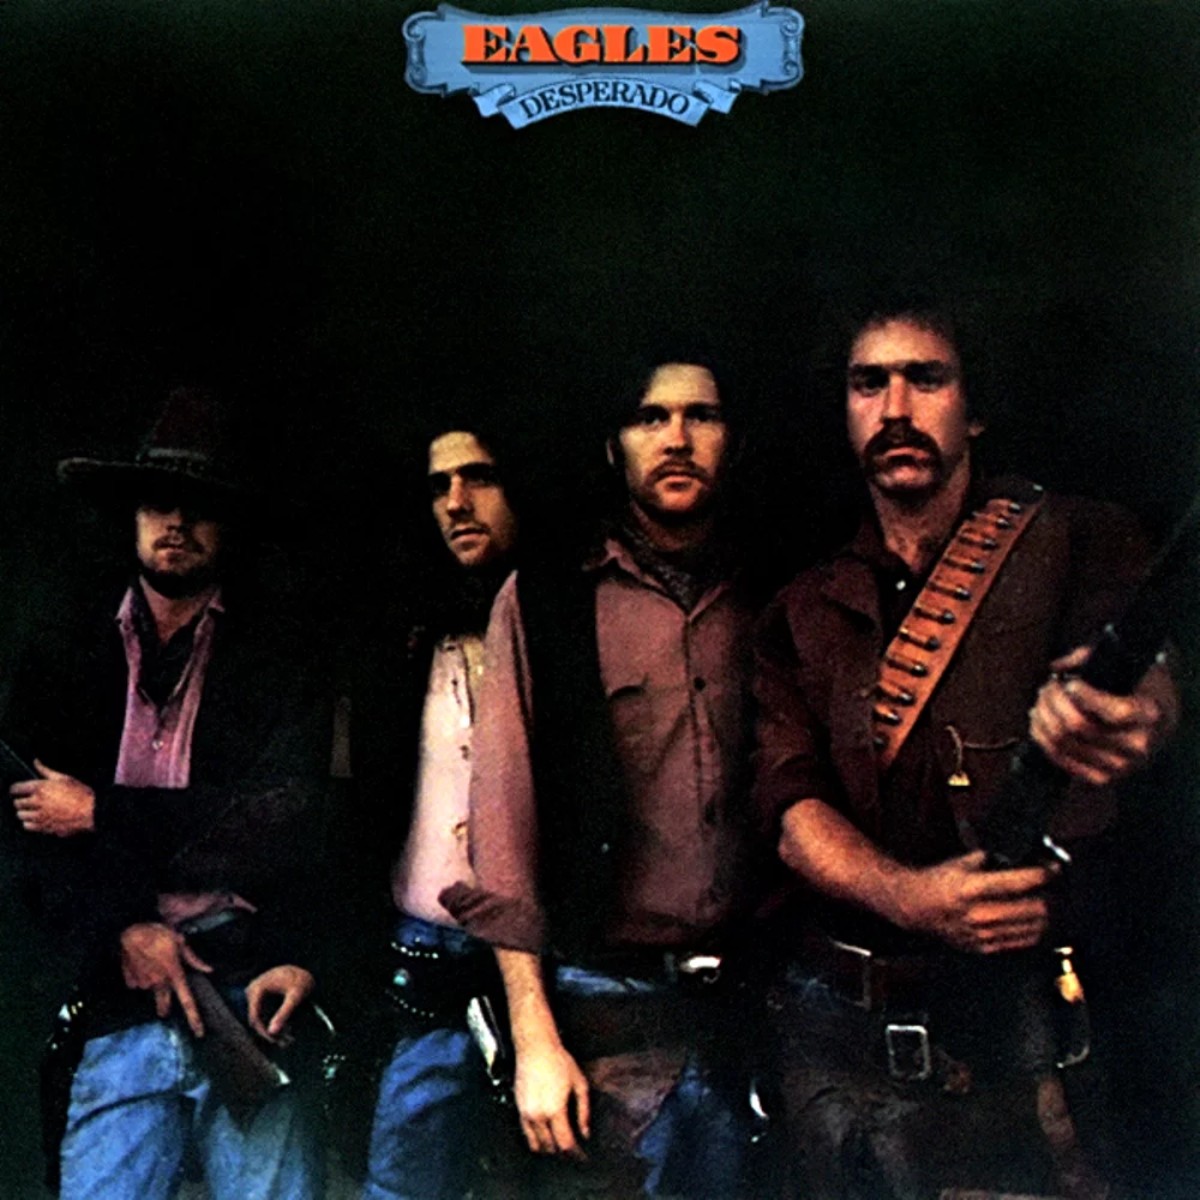 The Eagles, "Desperado" album